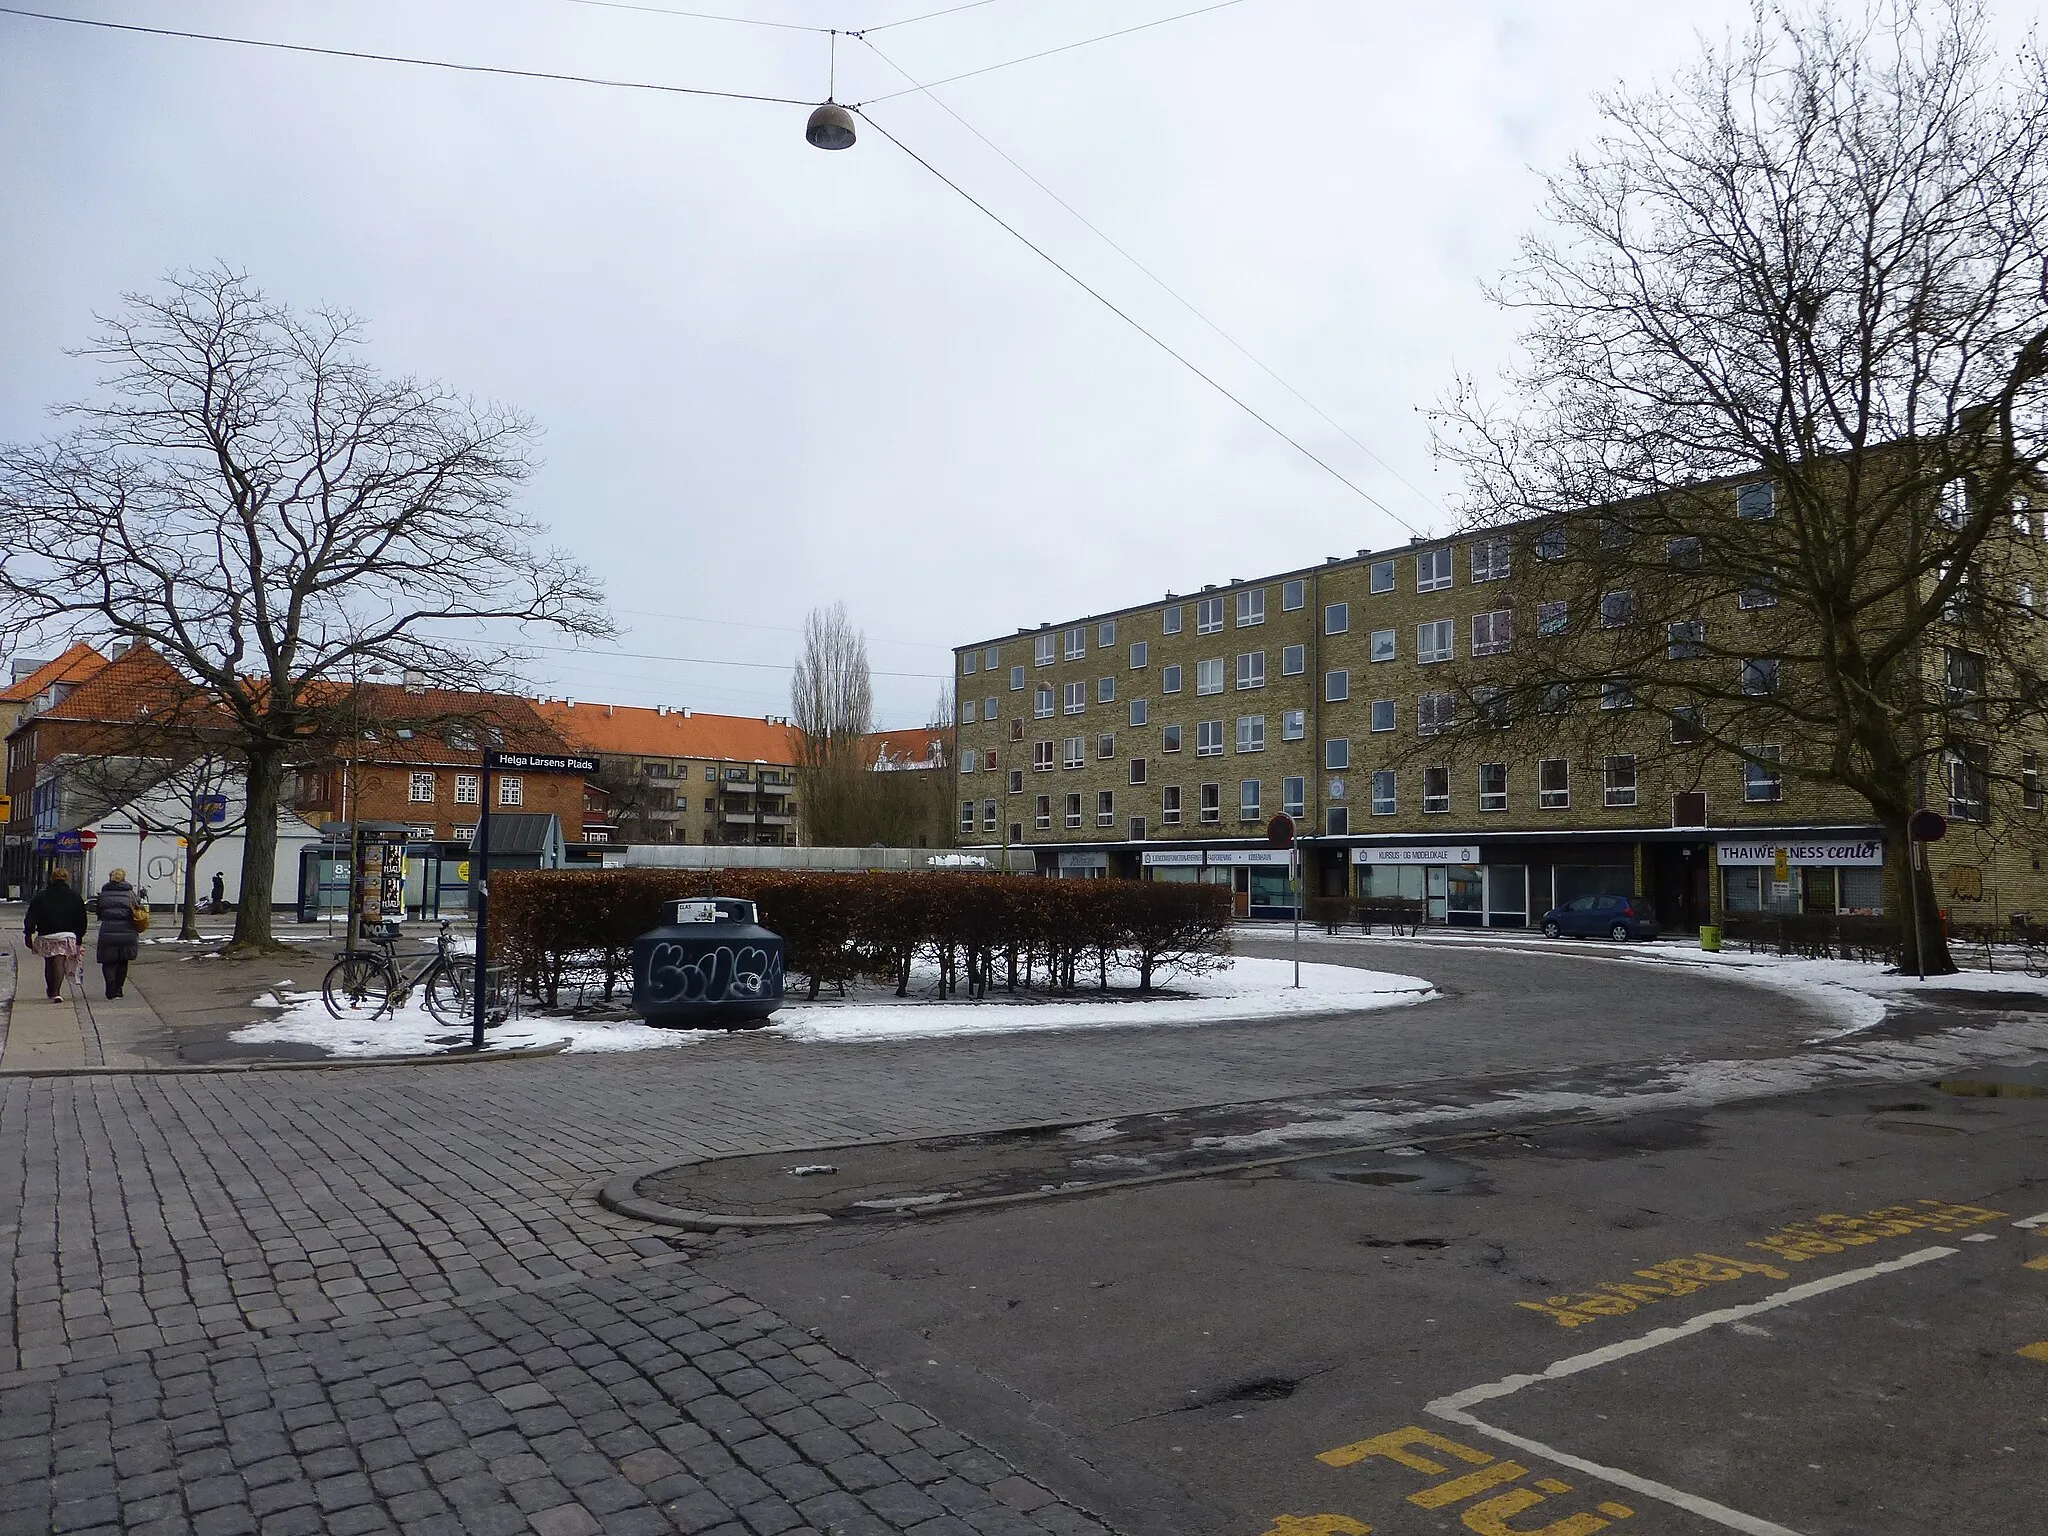 Photo showing: The square Helga Larsens Plads in Vanløse in Copenhagen.